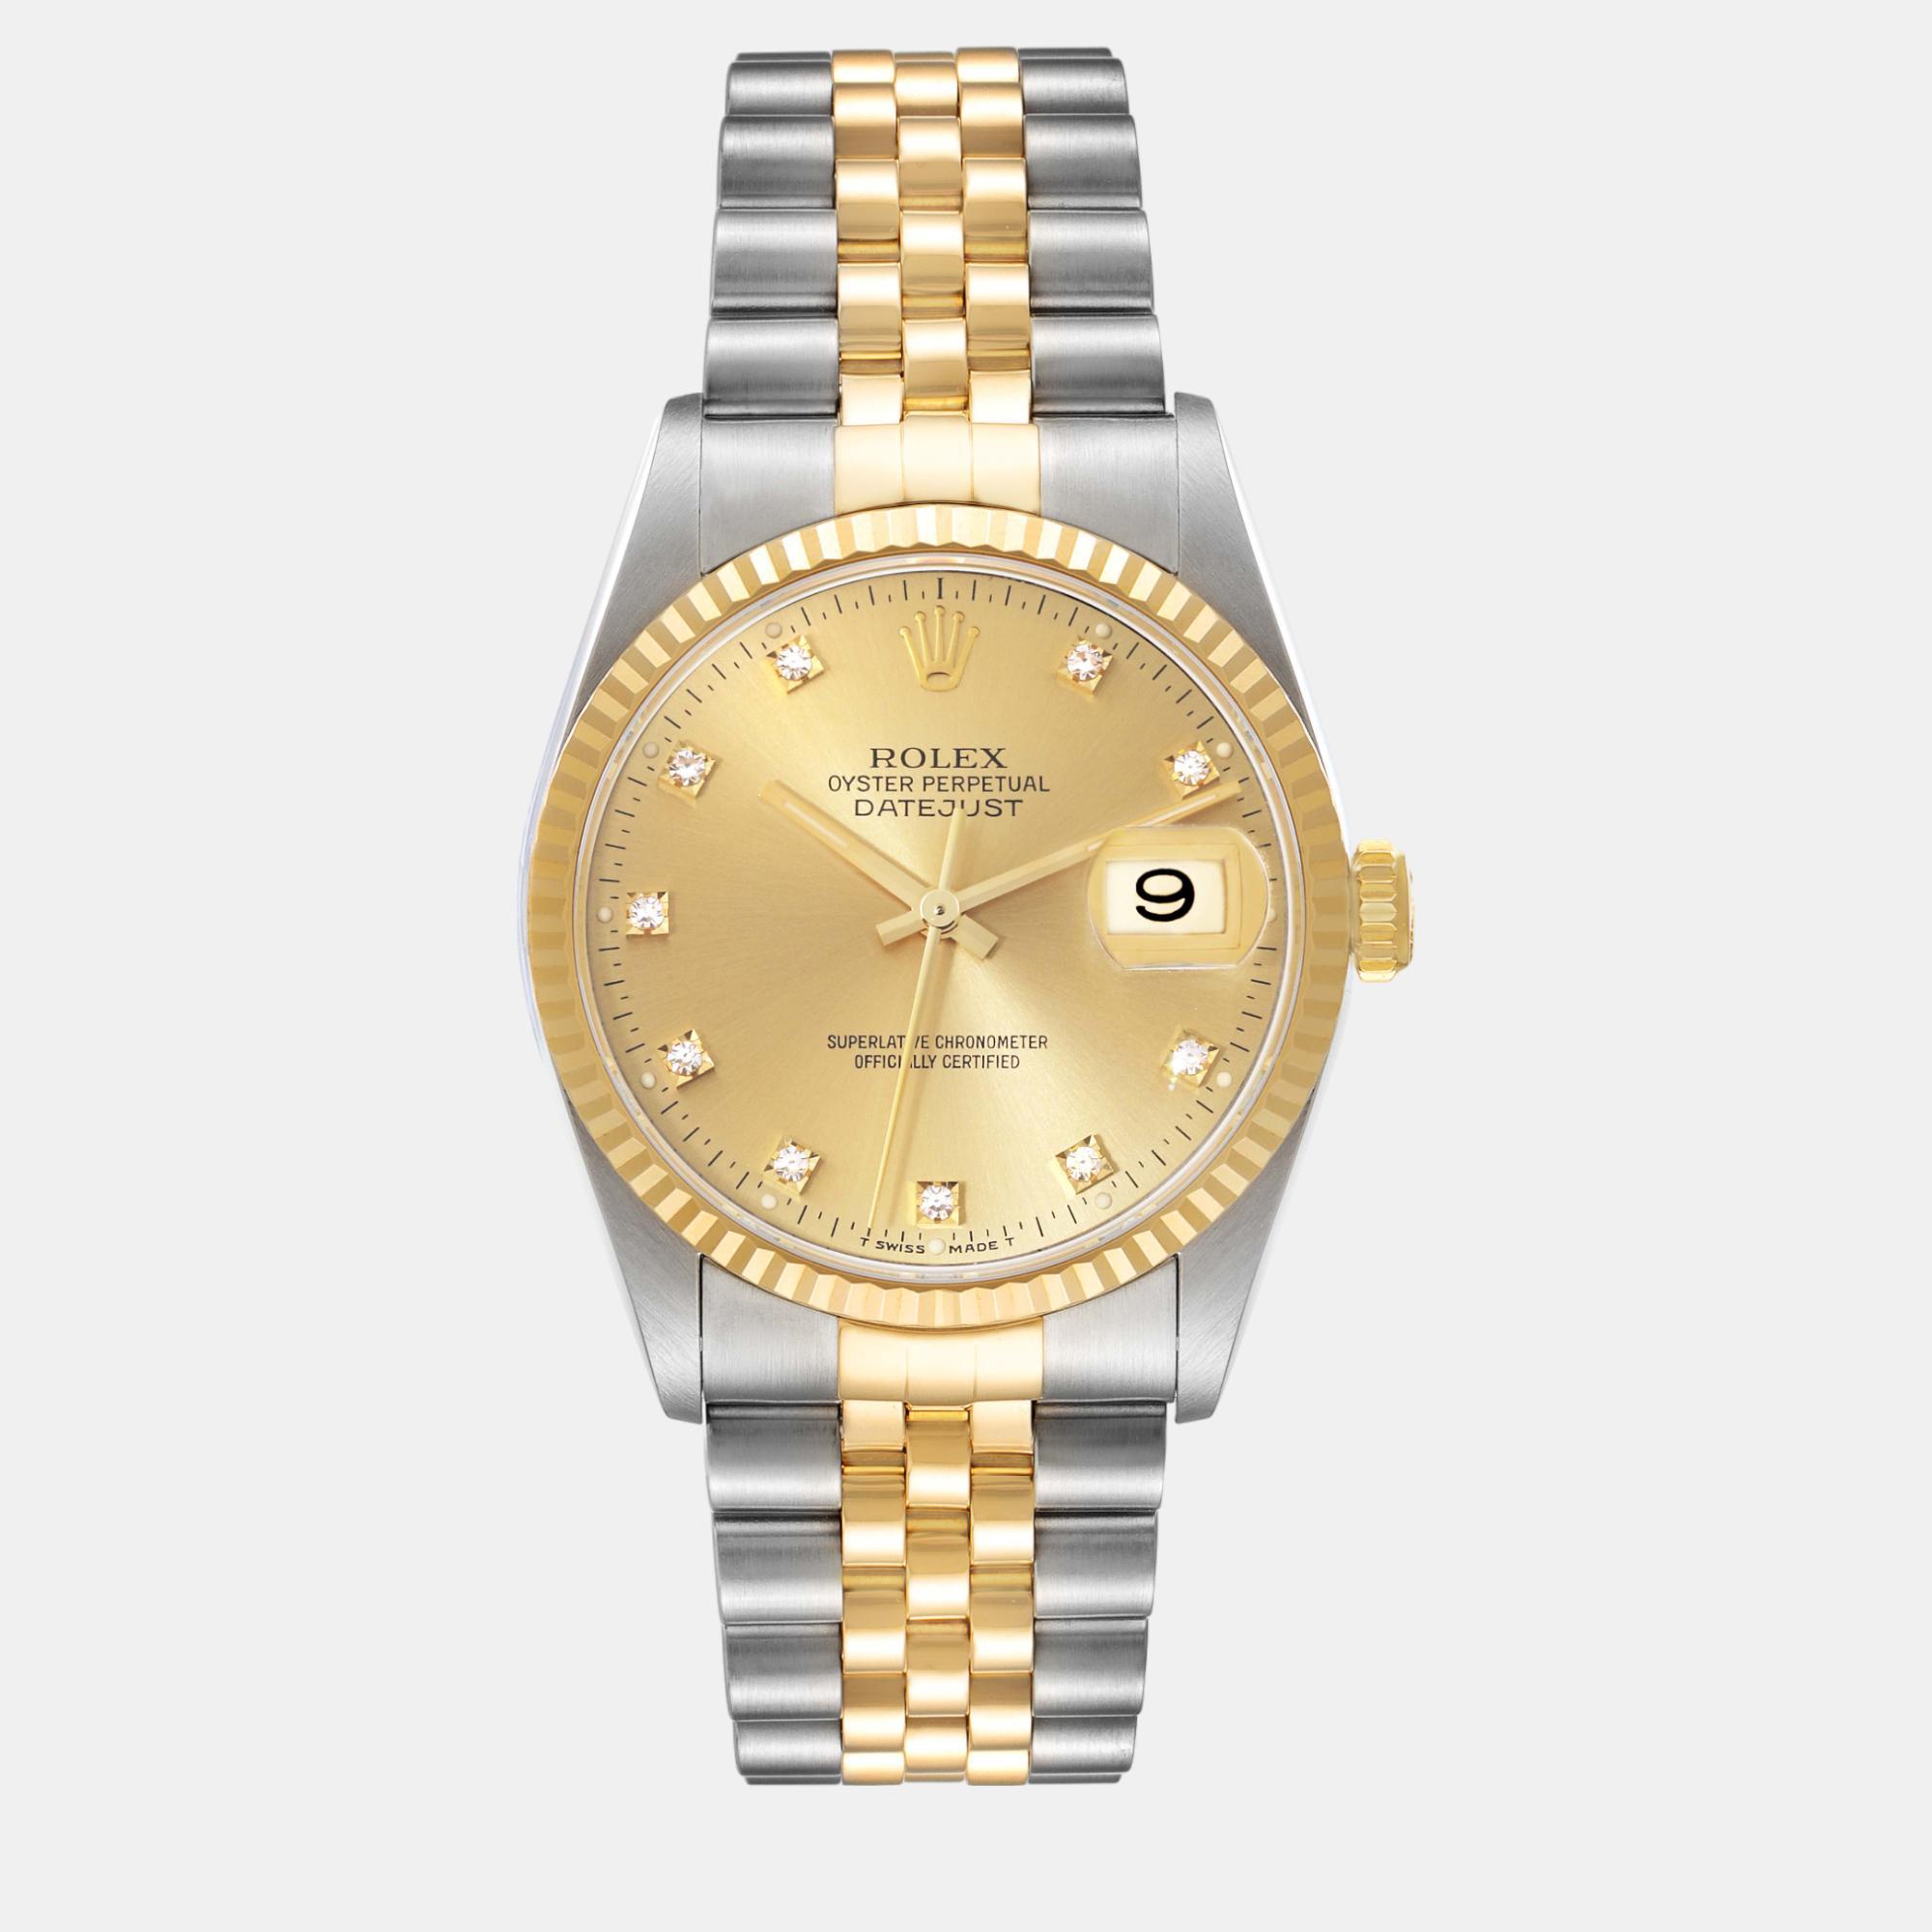 Rolex datejust champagne diamond dial steel yellow gold men's watch 16233 36 mm